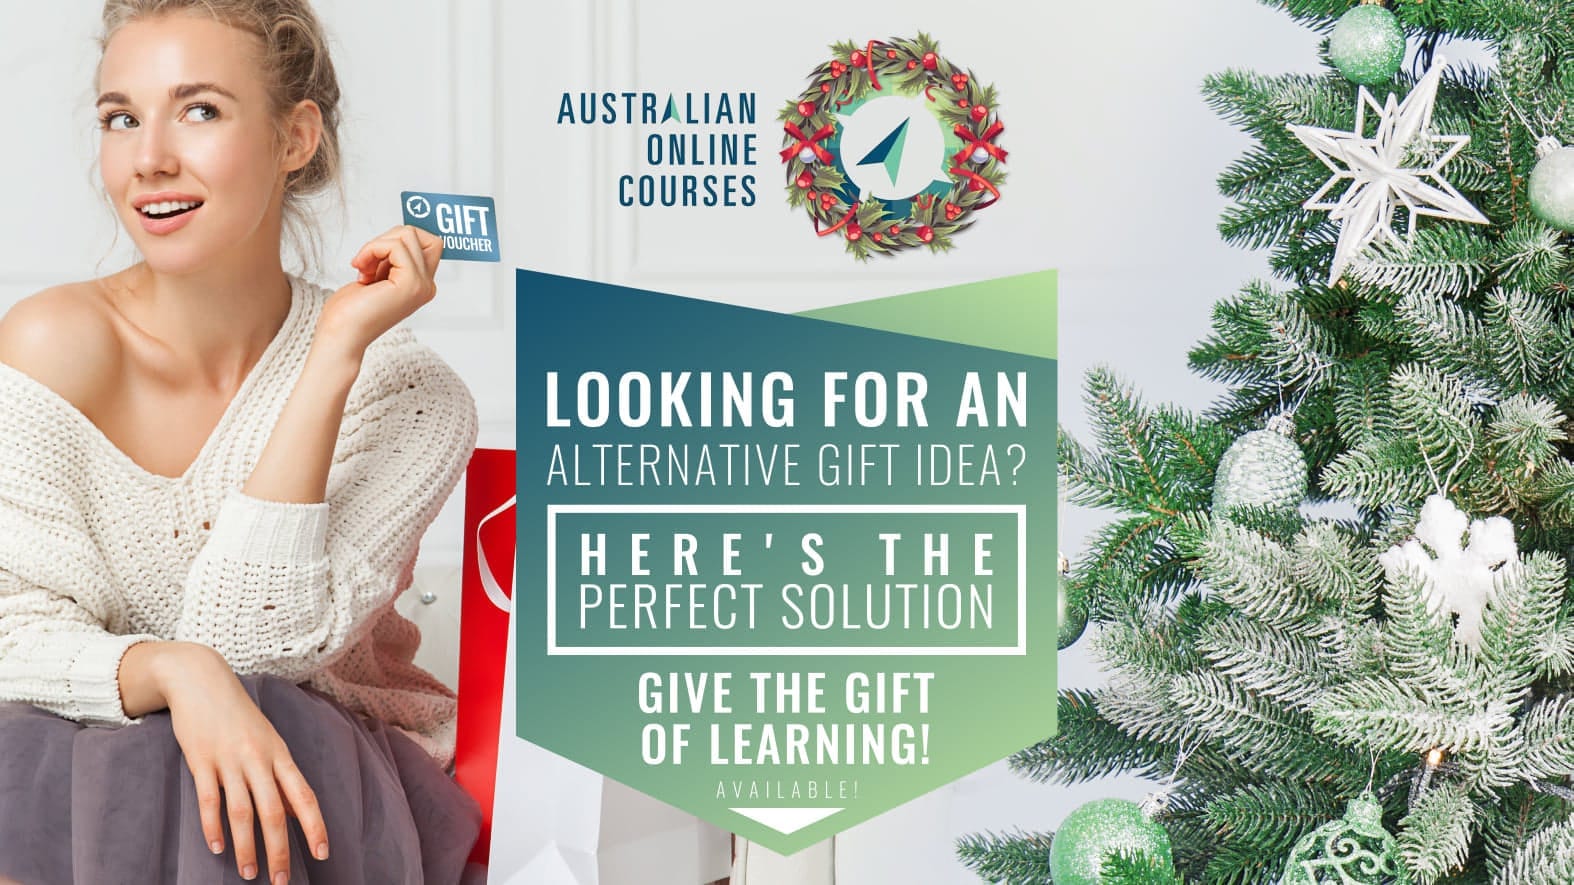 Australian Online Courses Gift Voucher